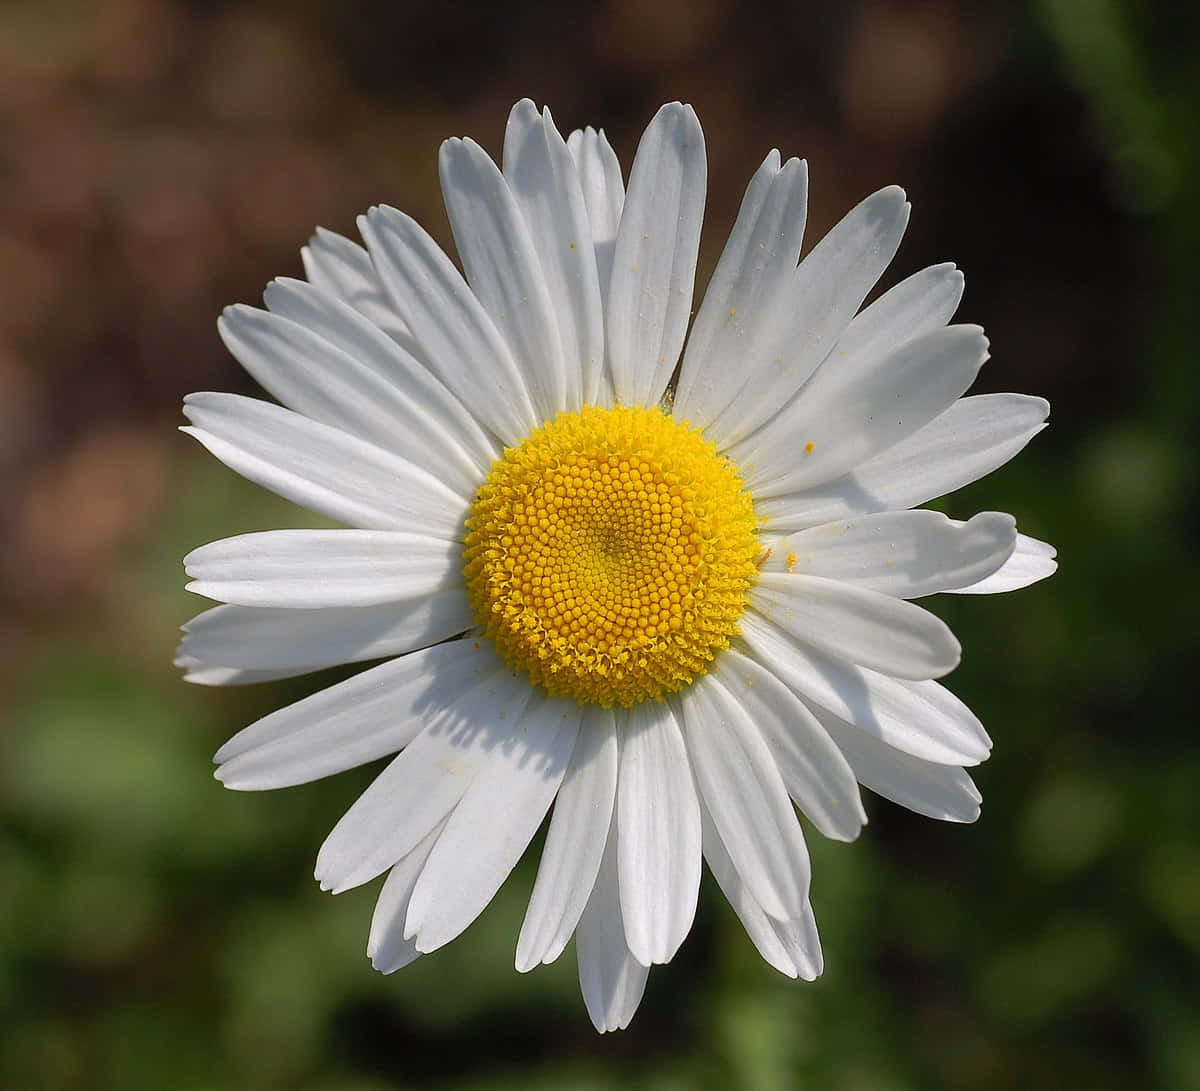 "A delicate daisy in full bloom."